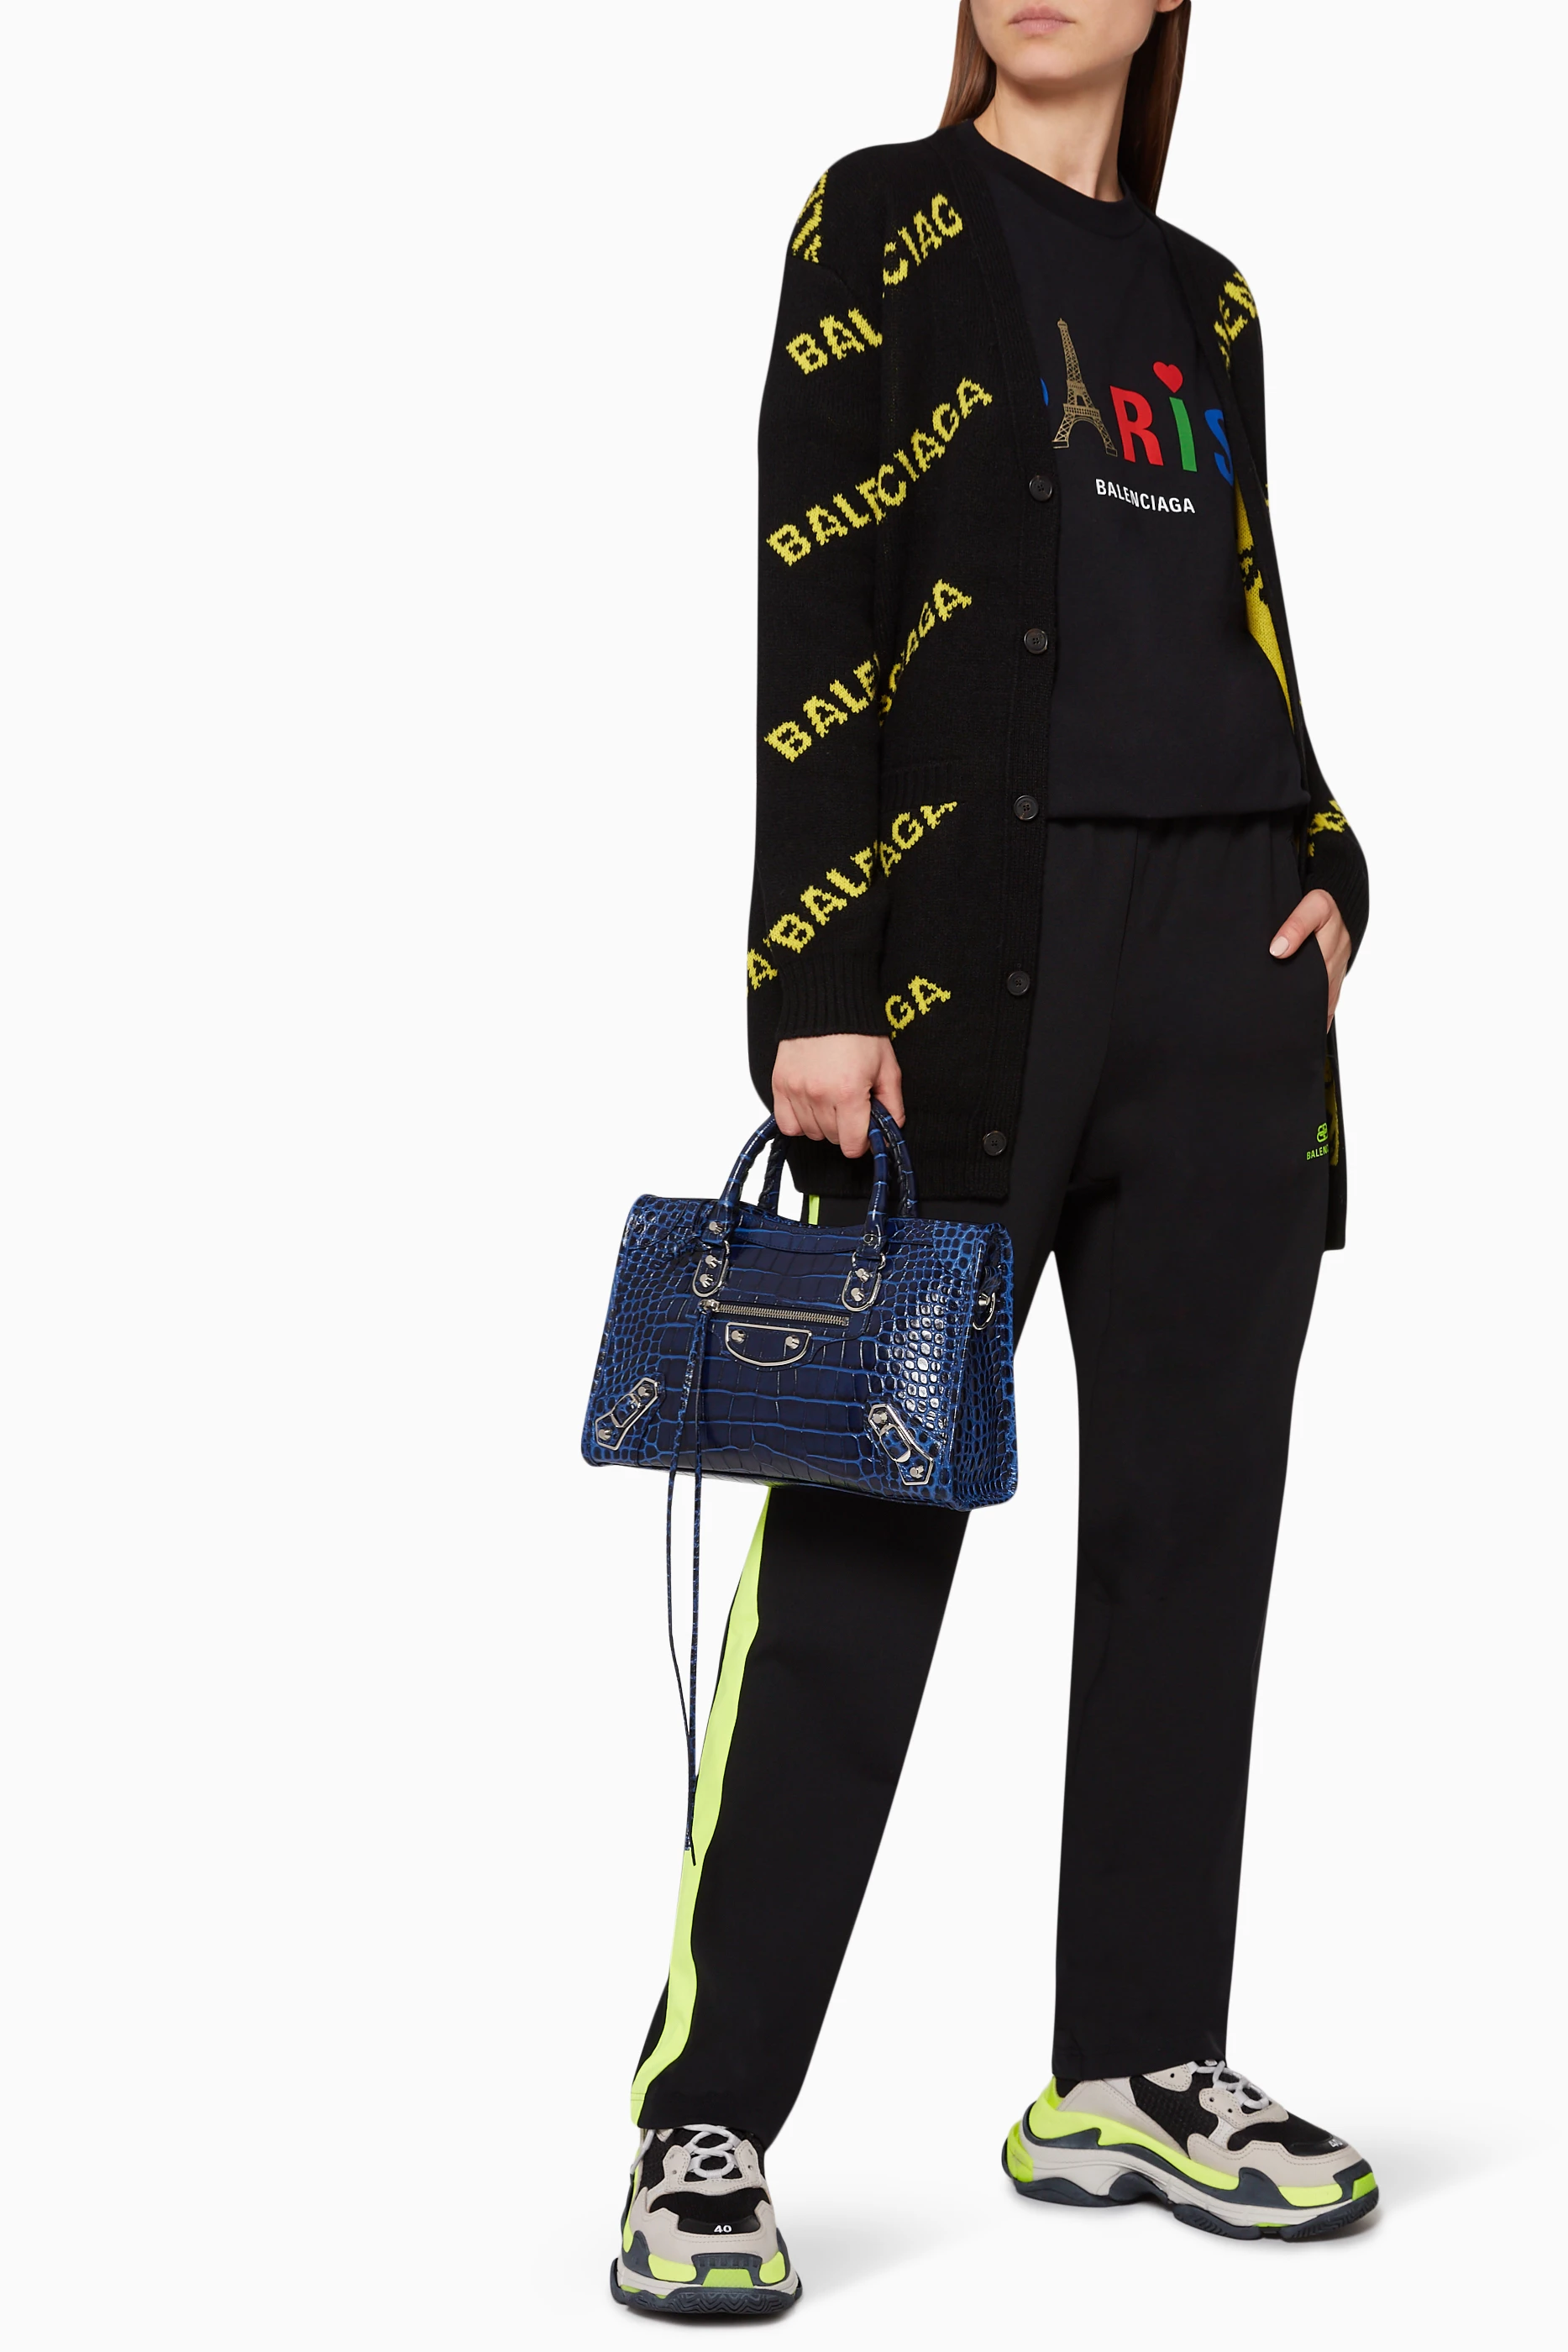 Buy Balenciaga Blue Mini Metallic Edge Shoulder Bag in Shiny  Crocodile-Embossed Leather for WOMEN in Oman | Ounass